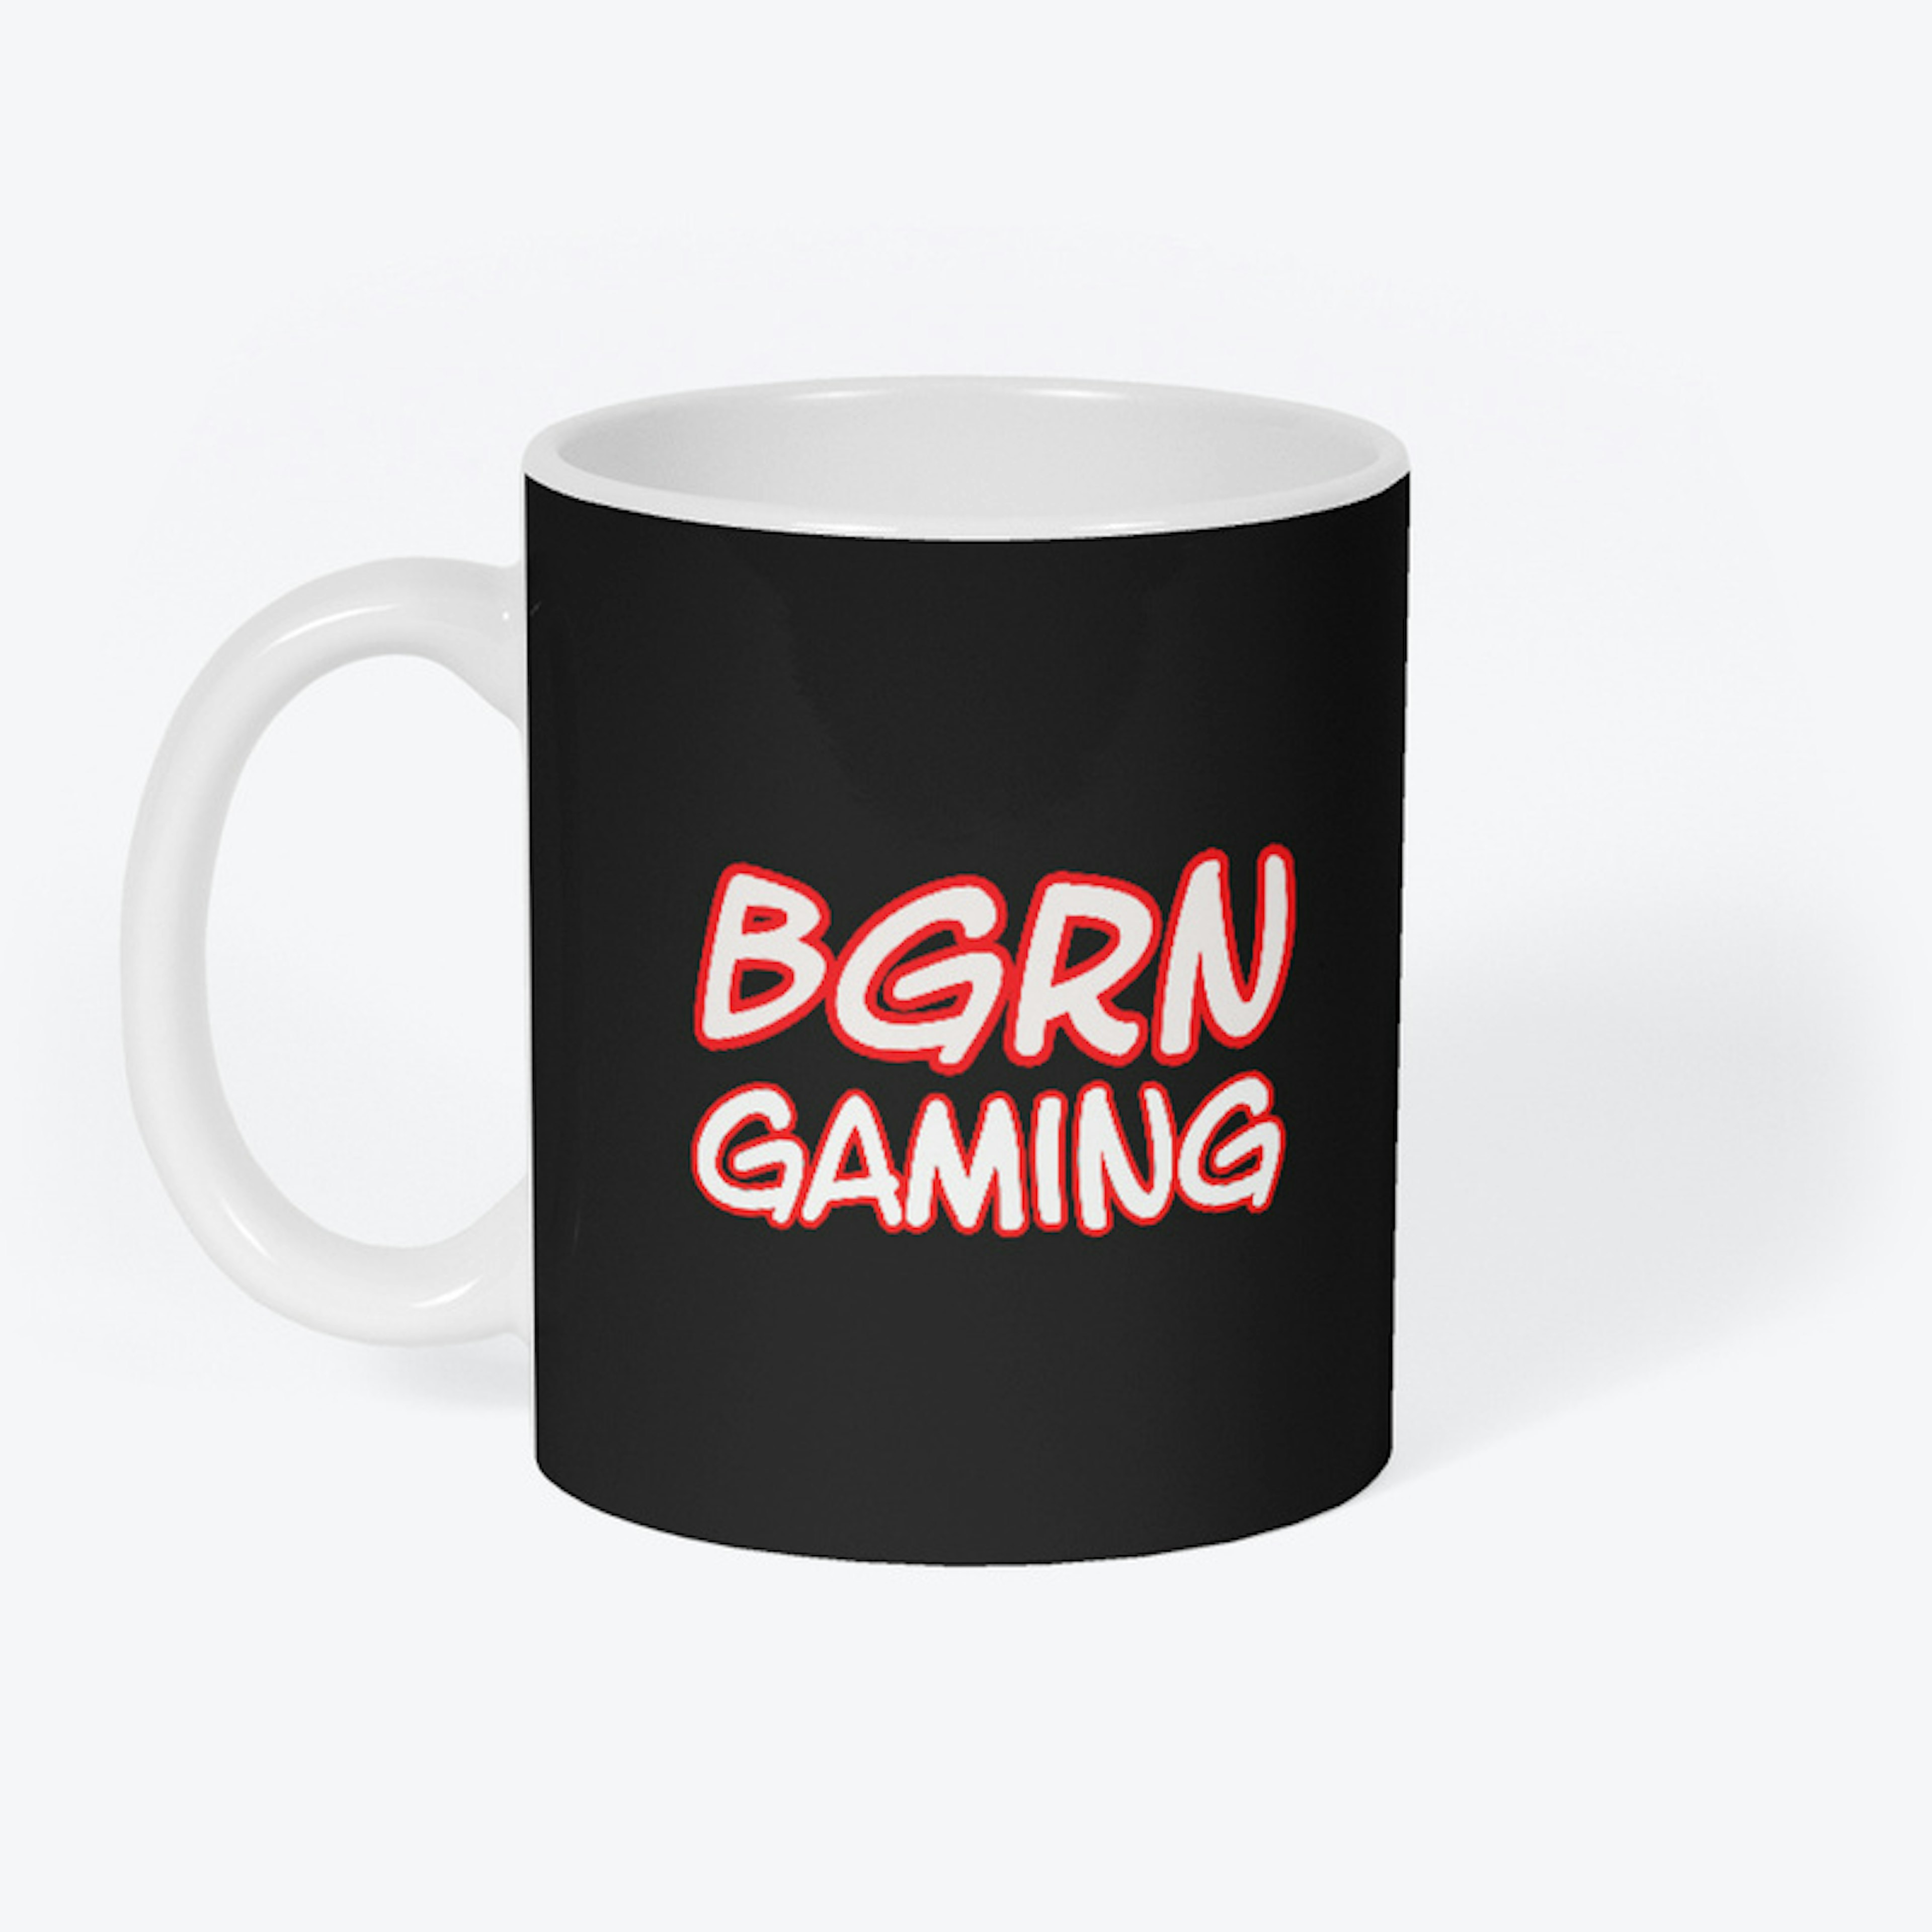 BGRN Gaming